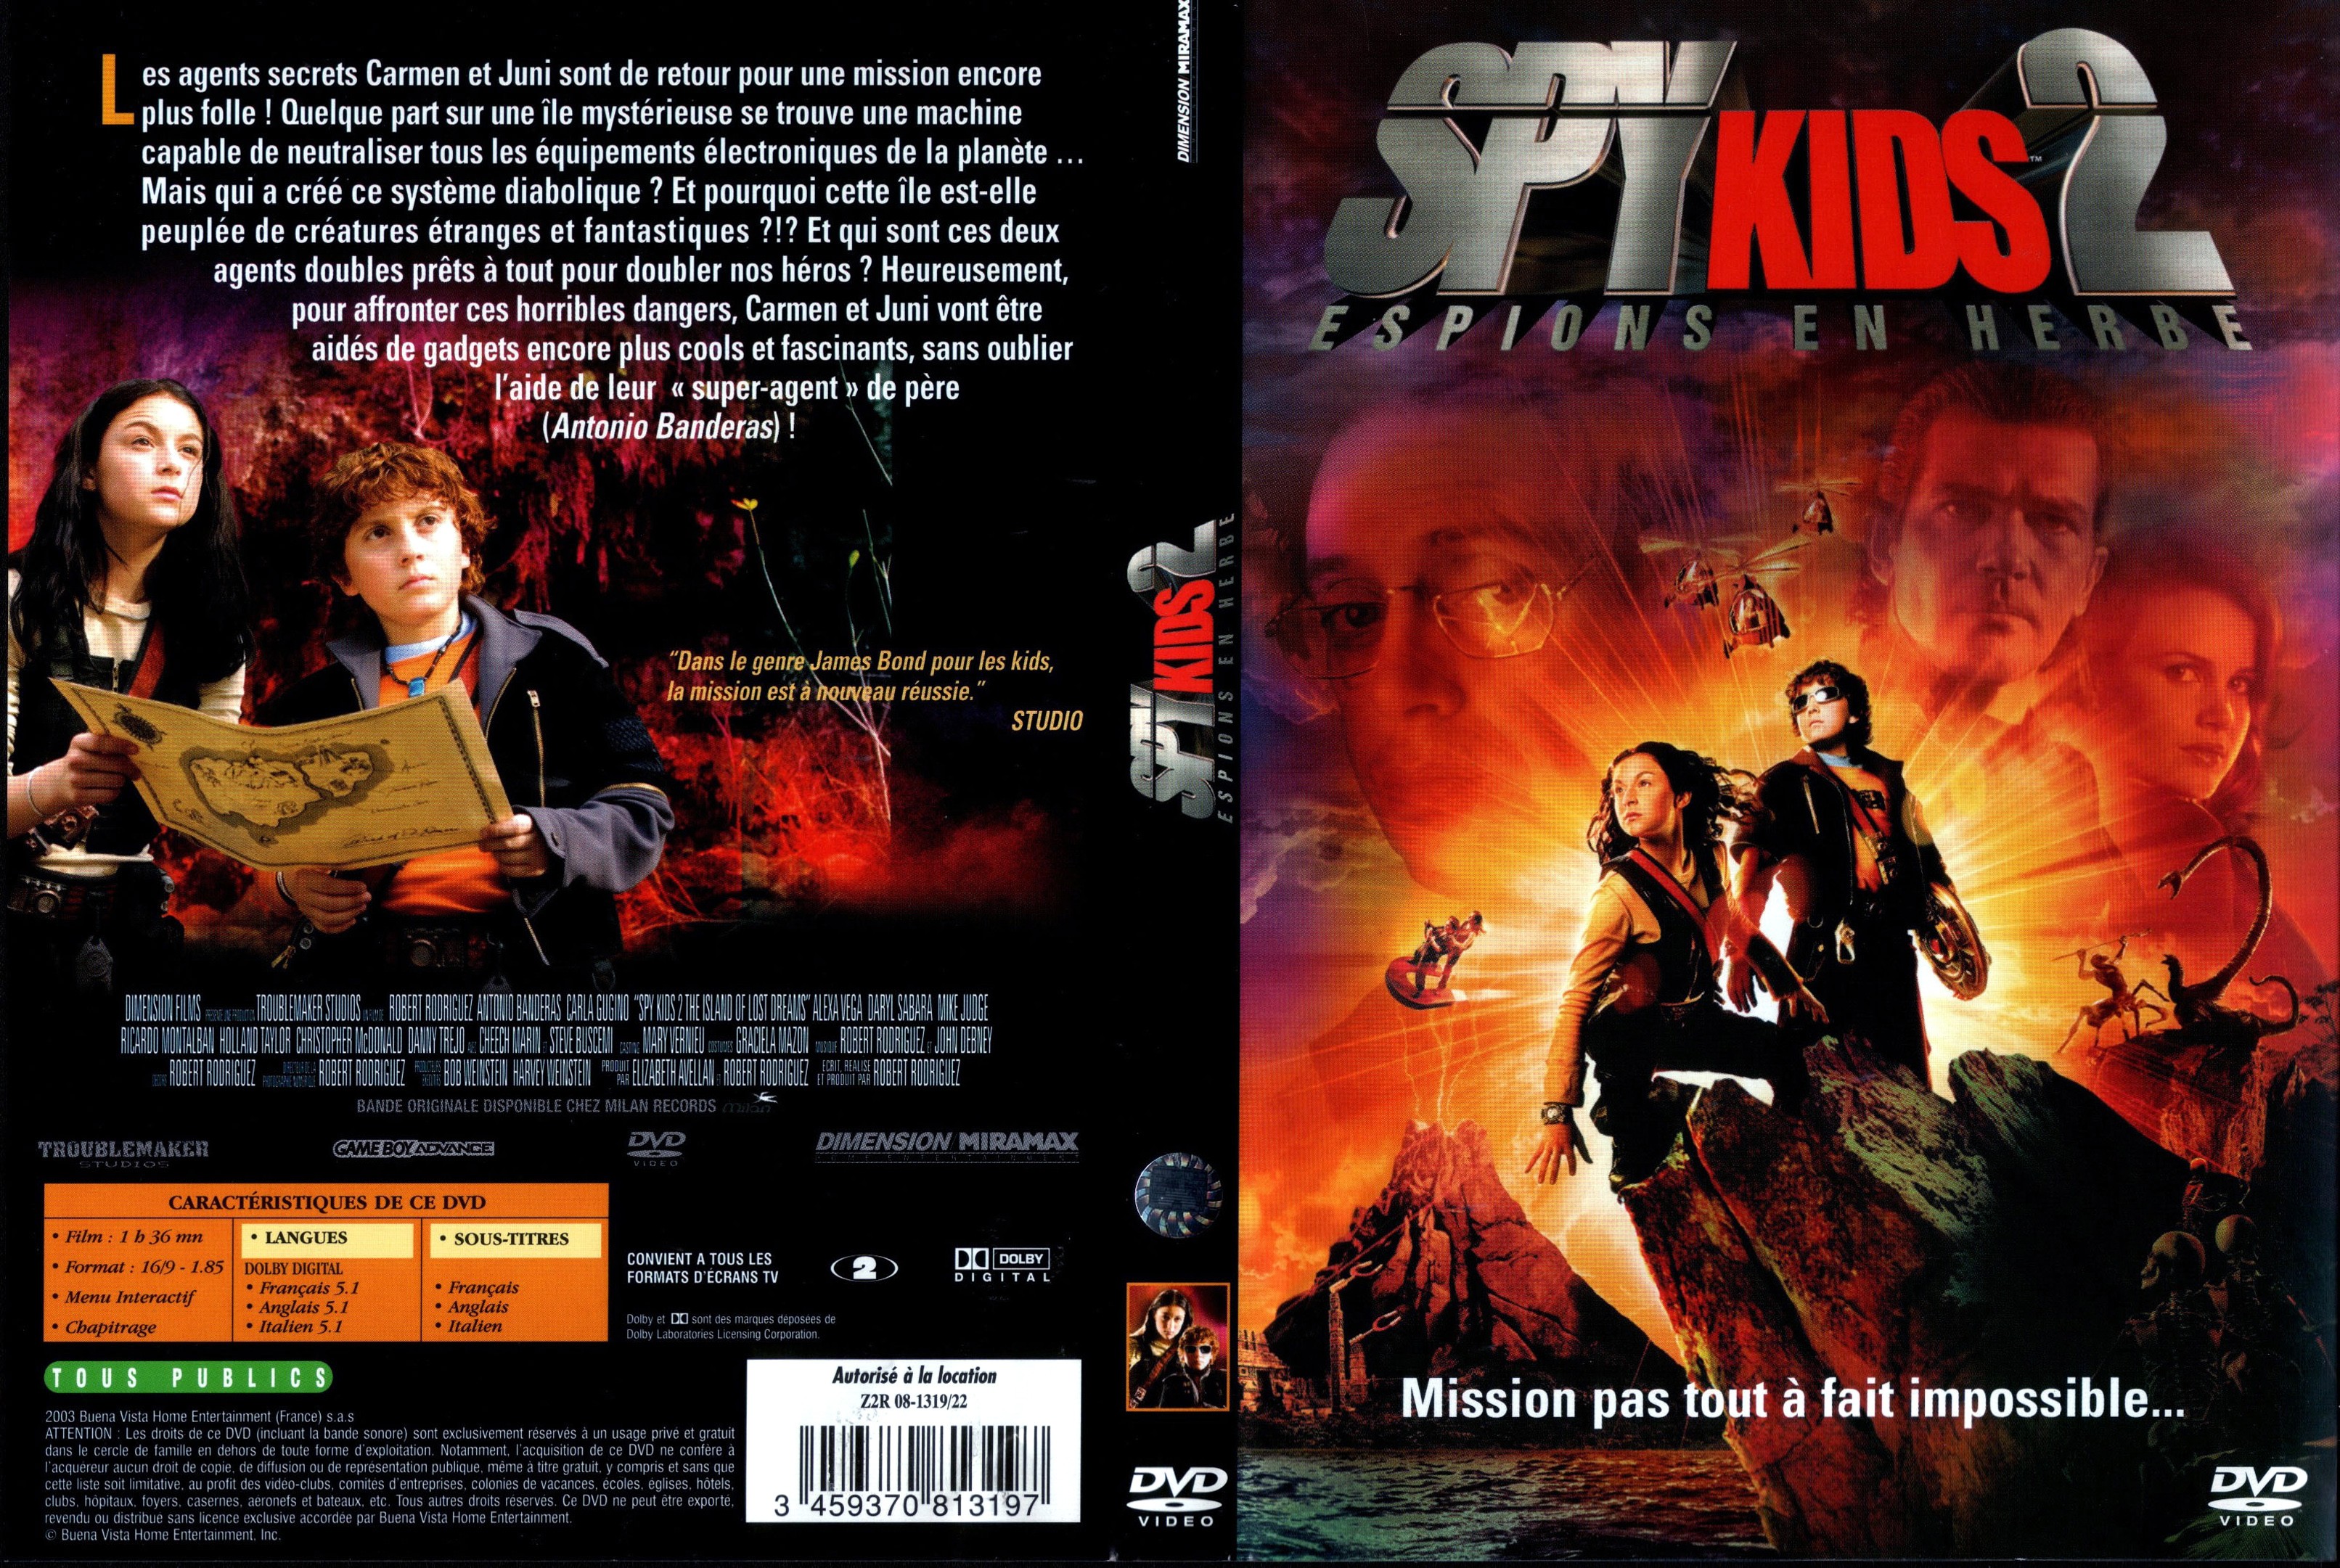 Jaquette DVD Spy kids 2